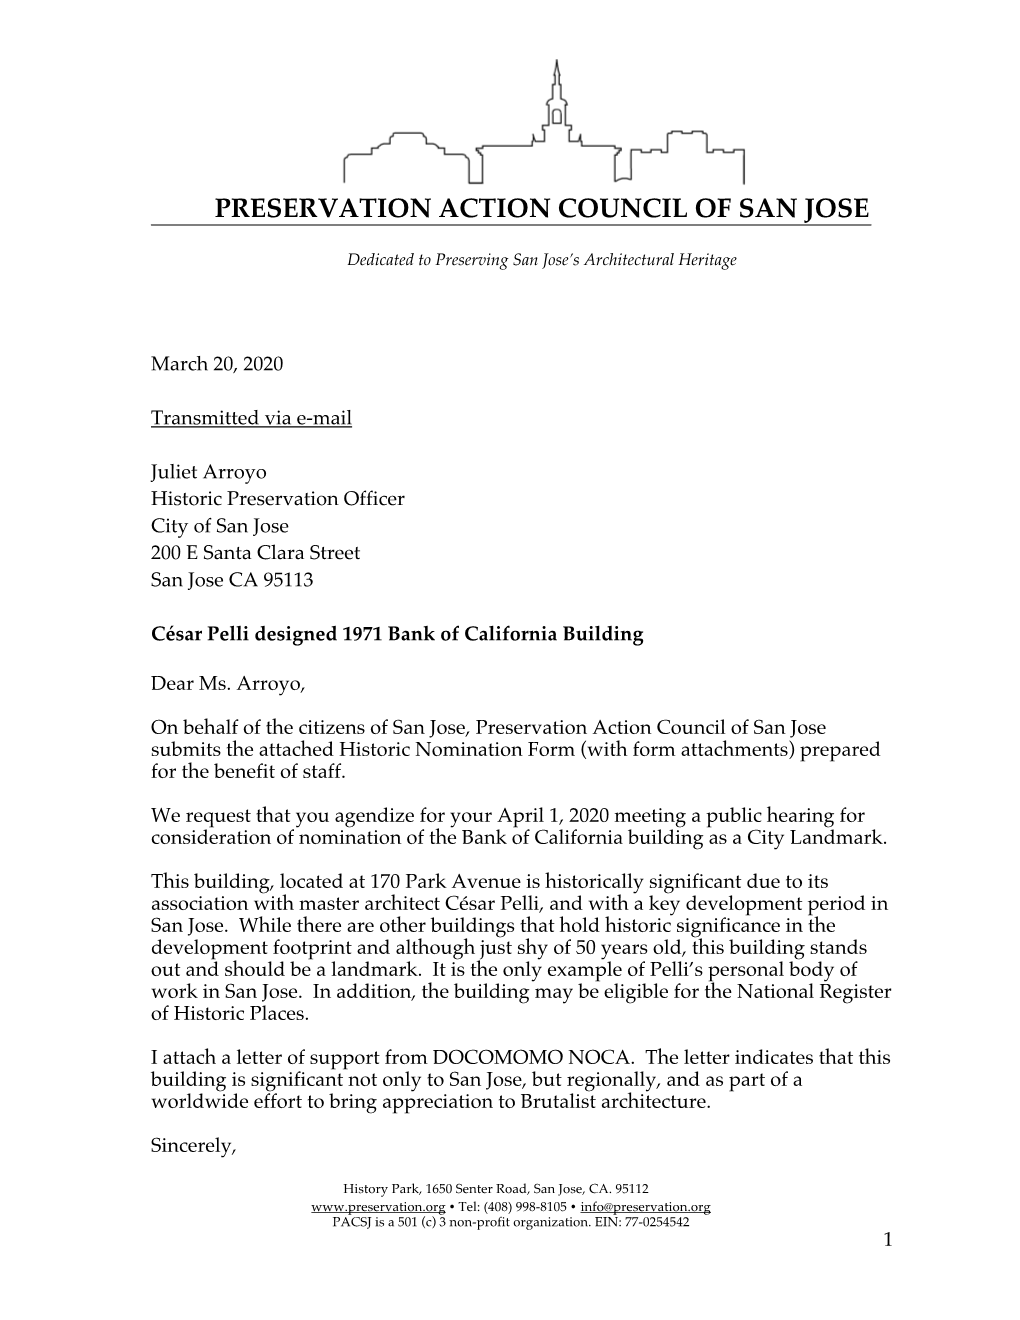 Preservation Action Council of San Jose